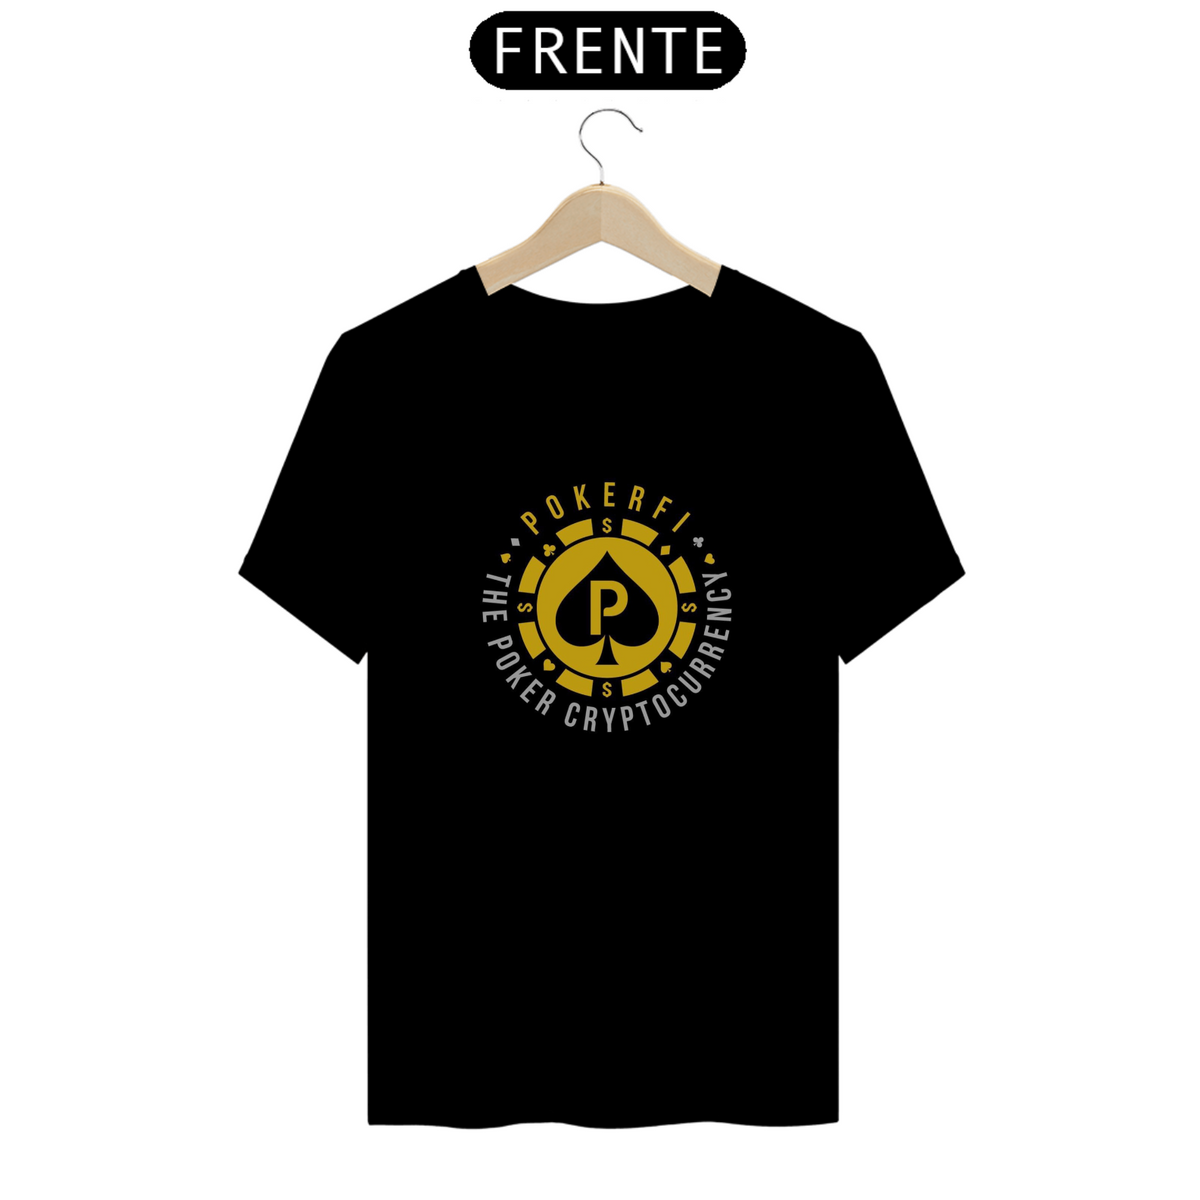 Nome do produto: T-shirt Prime Pokerfi